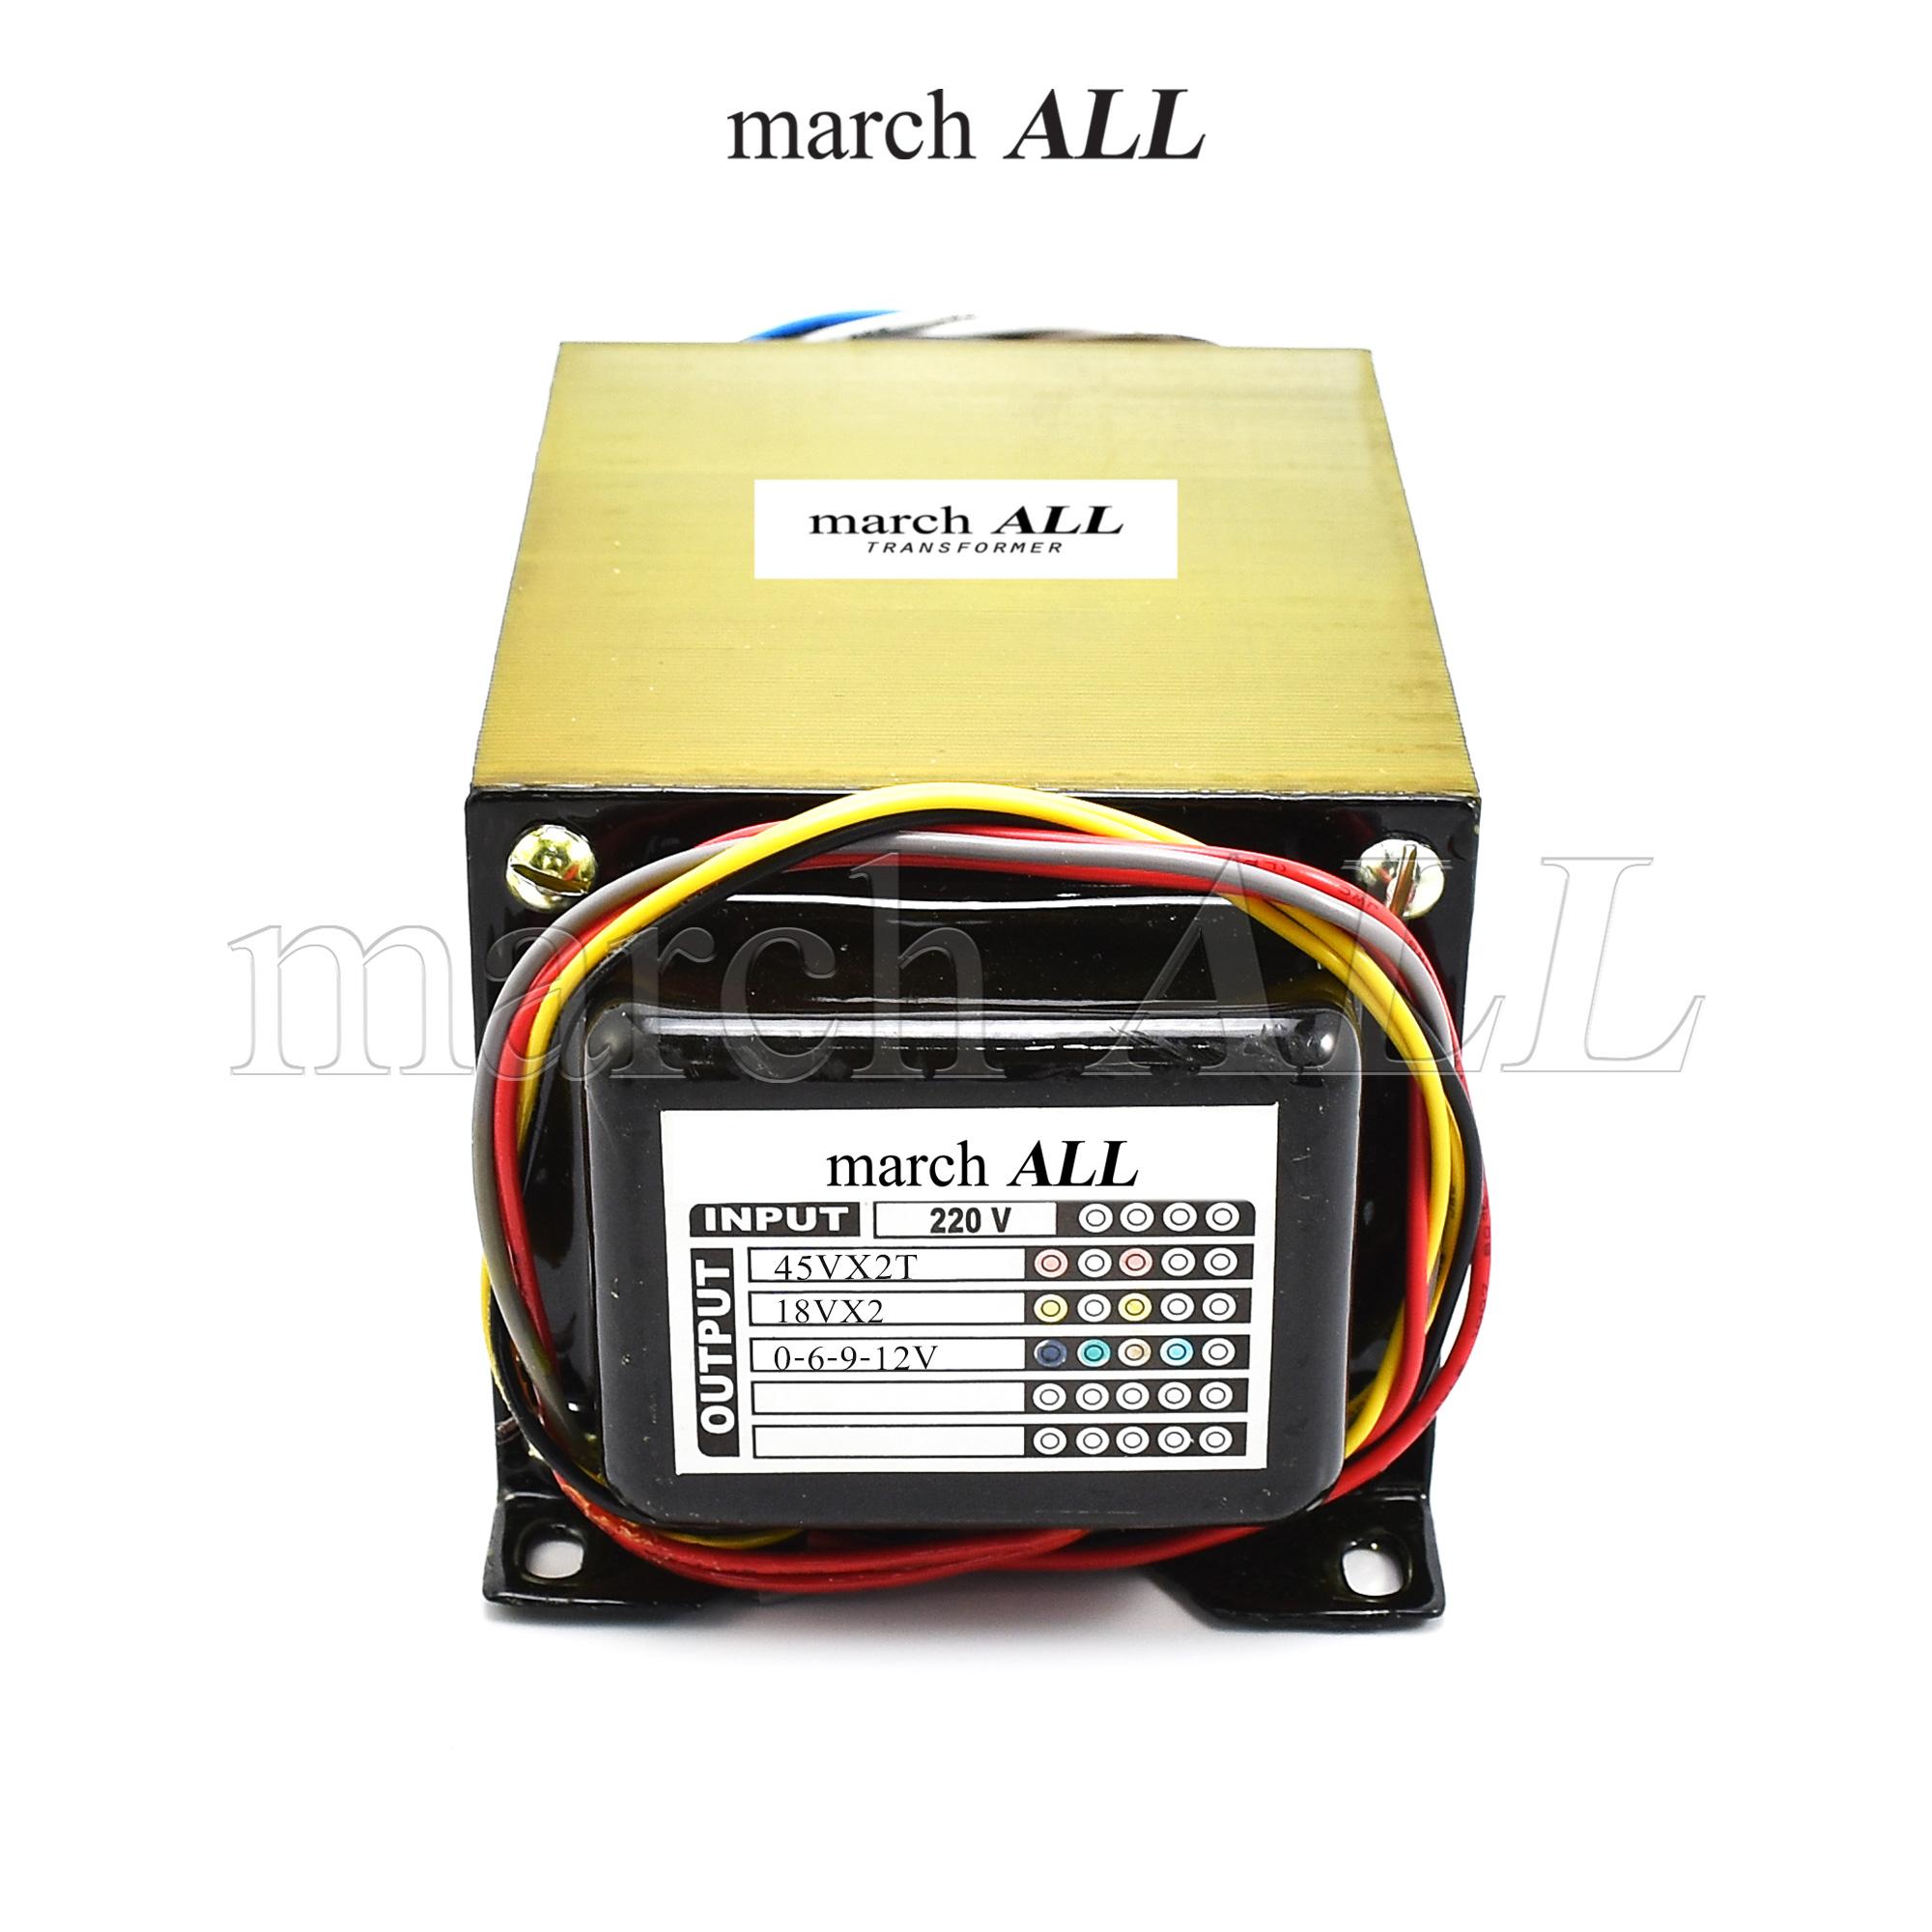 Marchall หม้อแปลงไฟฟ้า AC ขนาด 300W วัตต์ แท้ แรงดัน AC เอาพุต 45V-0-45V และ 18V-0-18V จ่ายกระแสได้ 6 ถึง 15Aพร้อมขด 0-6V-9V-12V ชนิด EI TRANSFORMER Center Tap CT ไฟคู่ 3 สายไฟ นำไปต่อ เรคติไฟเออร์  หรือ ต่อตรงได้ เป็นภาคจ่ายไฟได้ทุกวงจร เครื่องเสียง